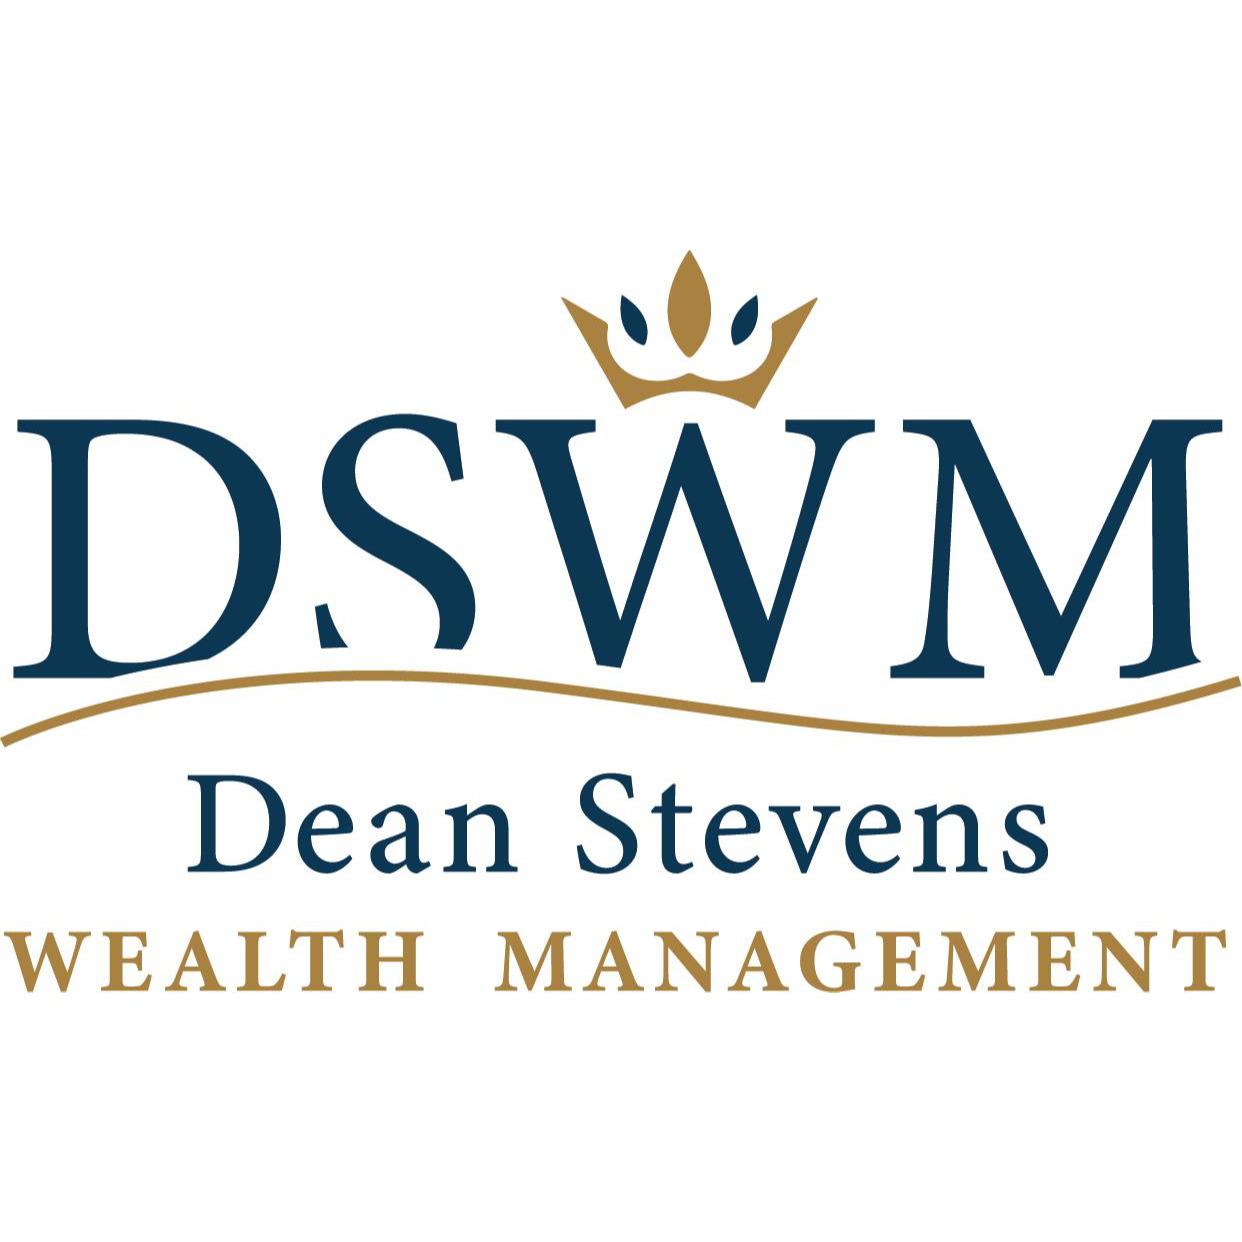 Dean Stevens Wealth Management